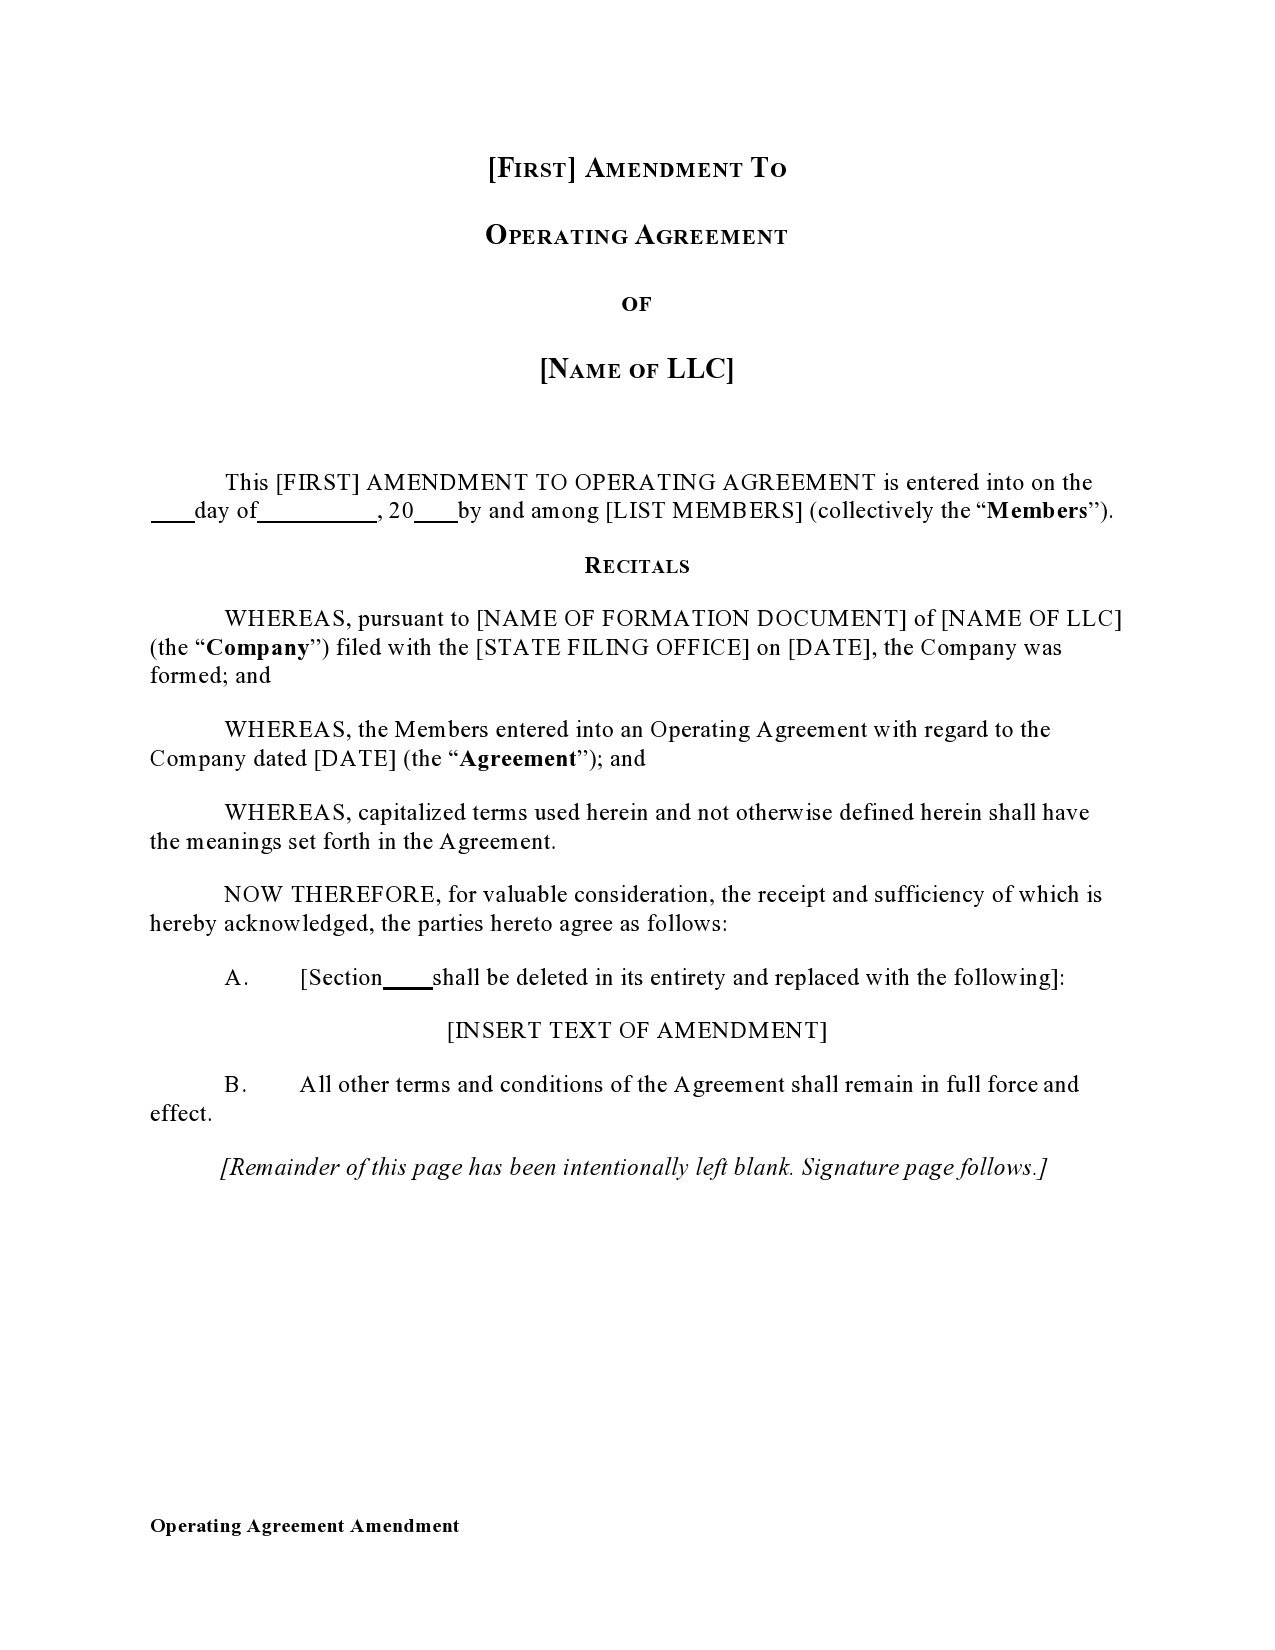 Free operating agreement amendment 03